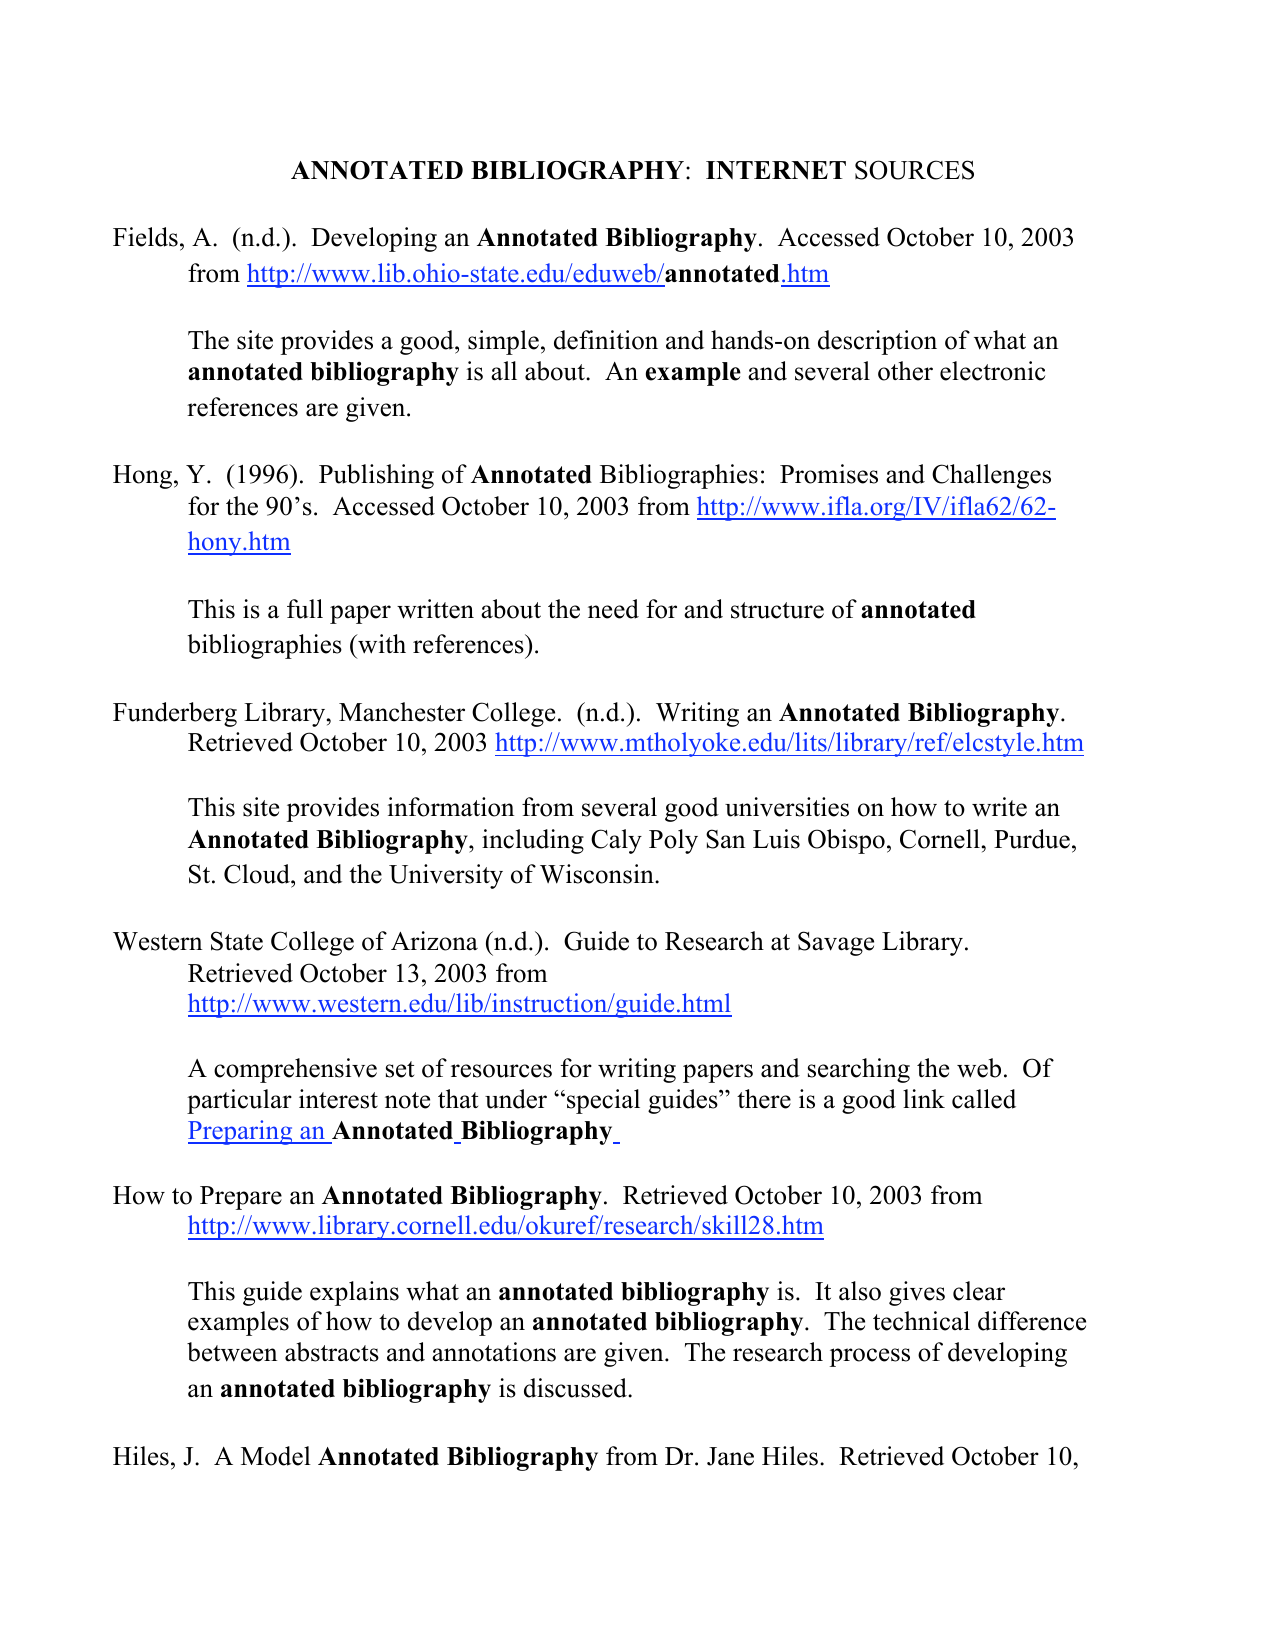 make an annotated bibliography online